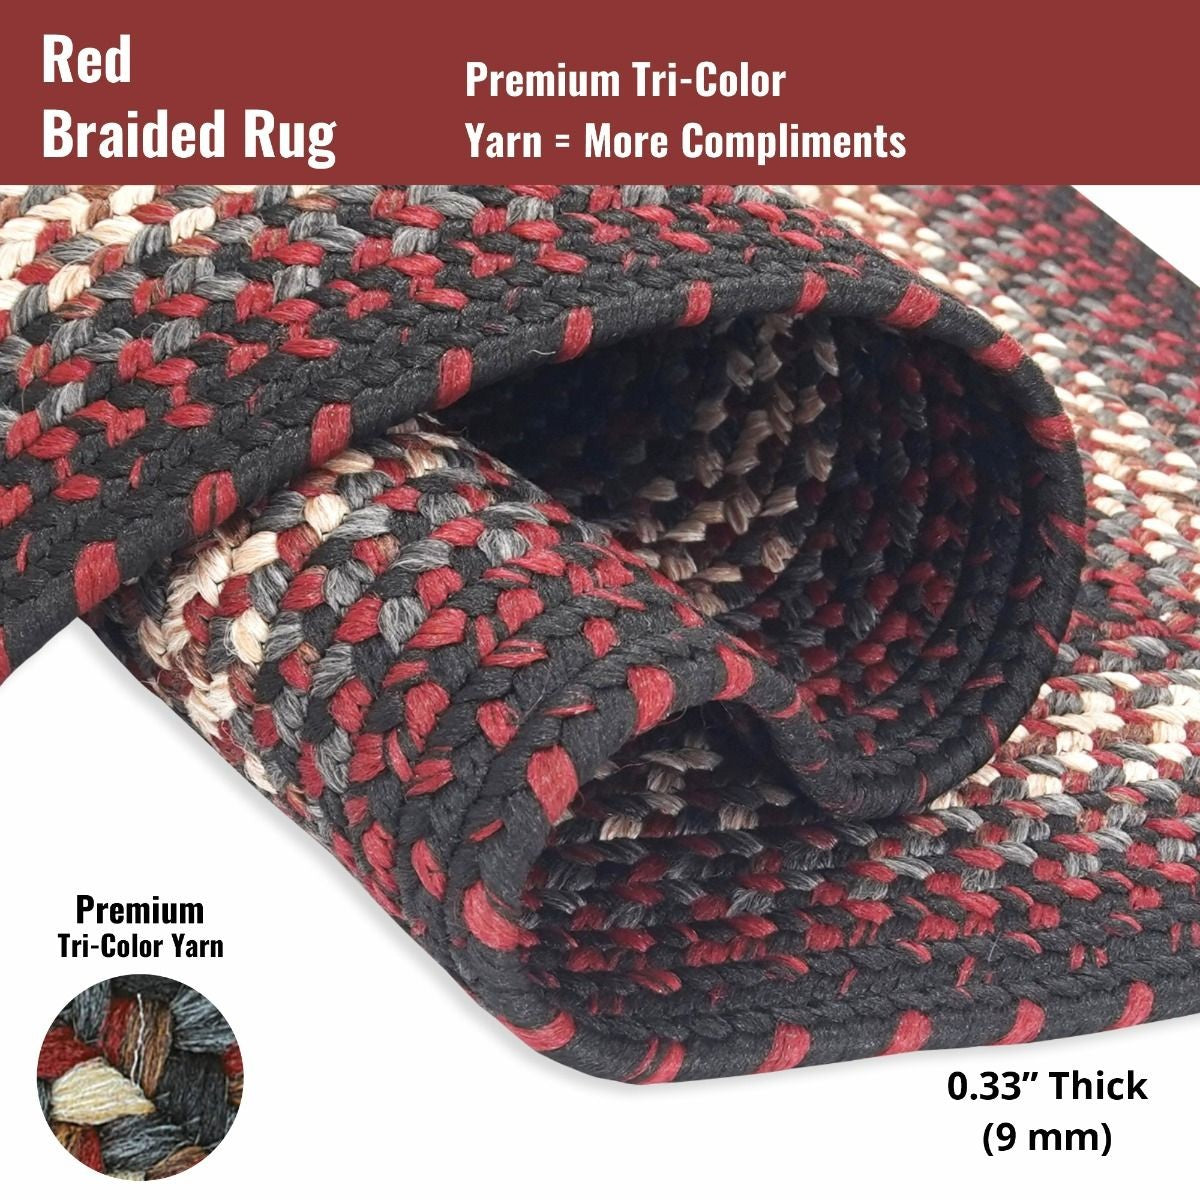 Slate Braided Area Rug By IHF Rugs. 4' x 6' Rectangle Rug. Burgundy, Black